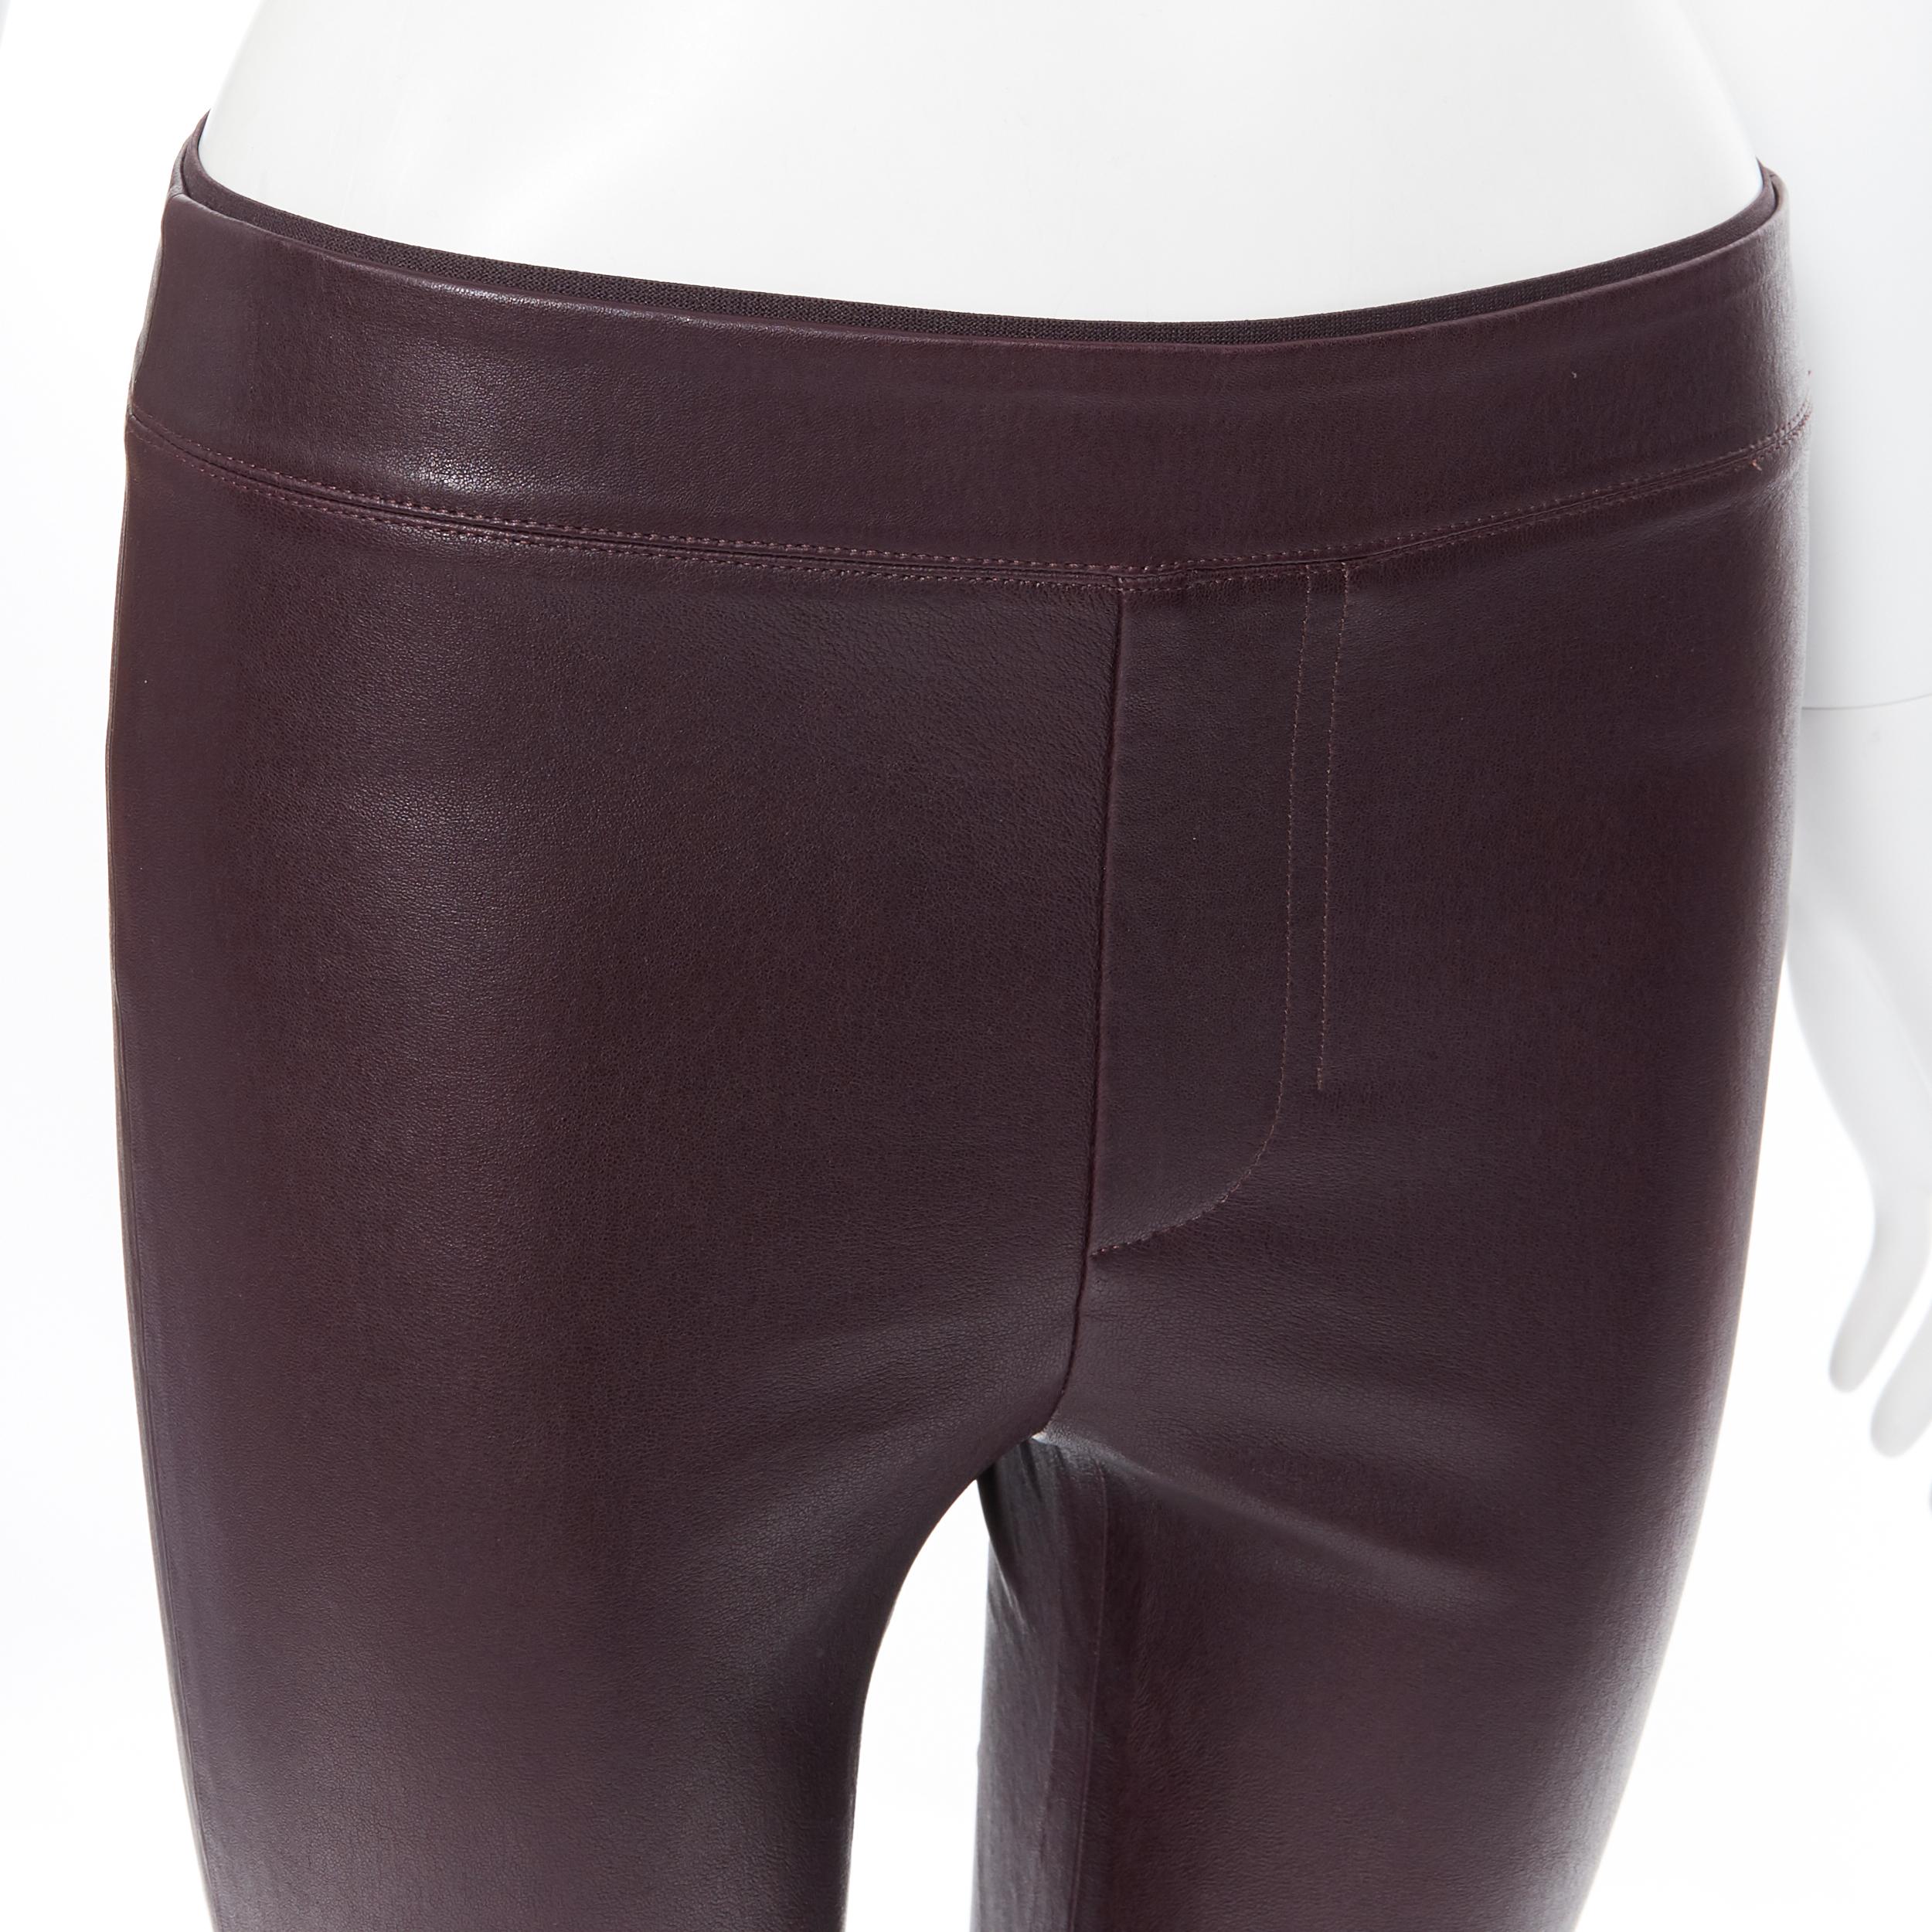 HELMUT LANG 100% leather dark burgundy minimal stretchy skinny leg pants XS 2